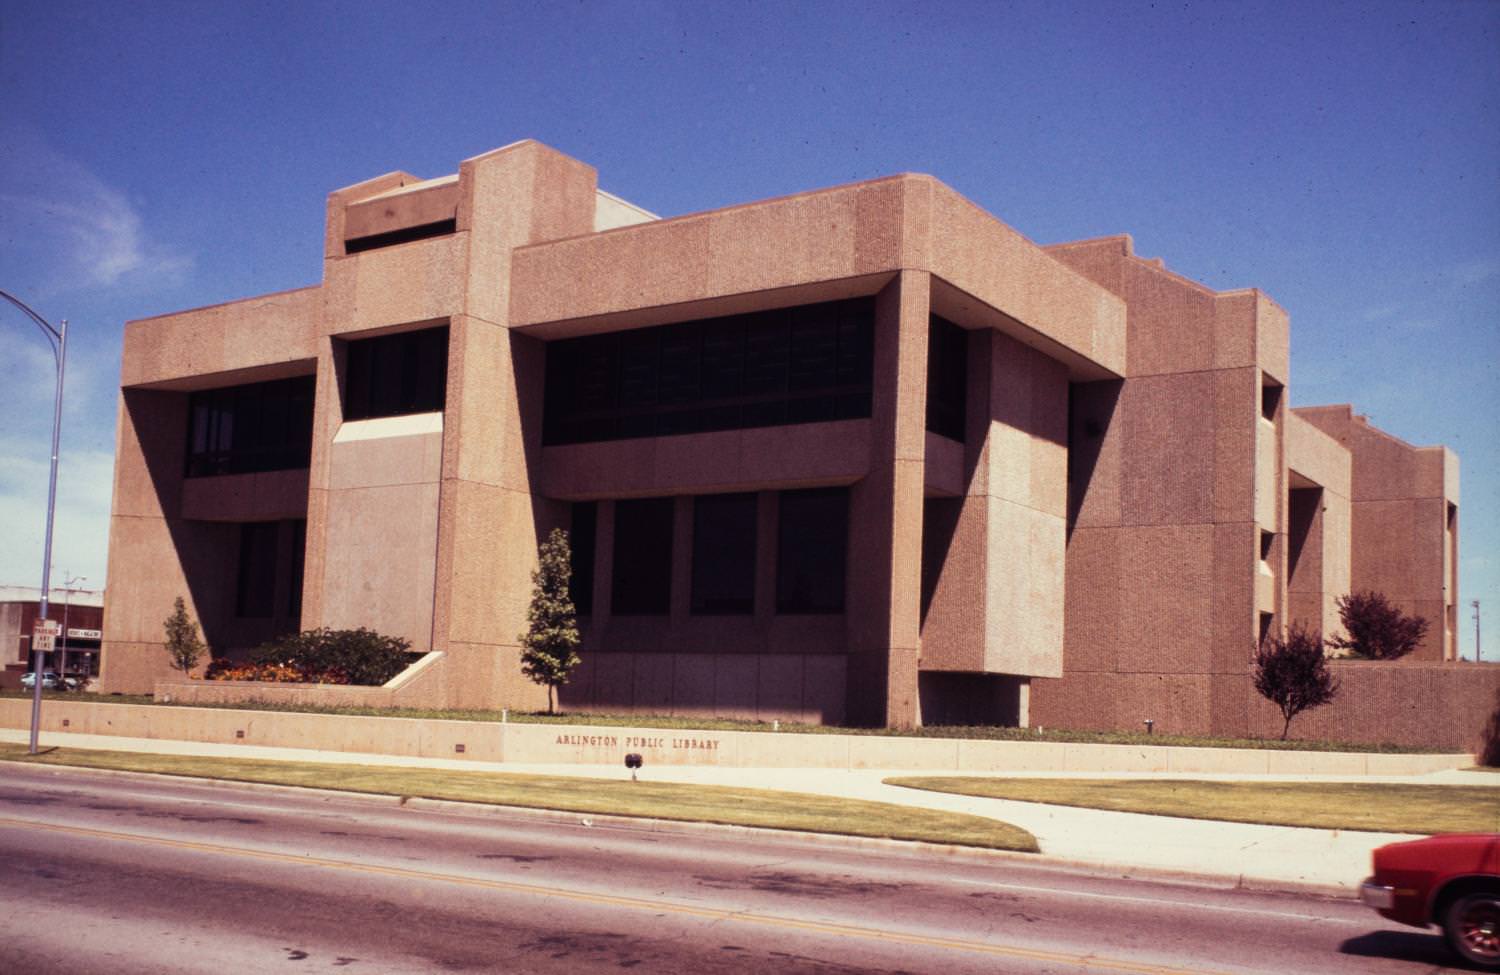 Arlington Public Library, 1973